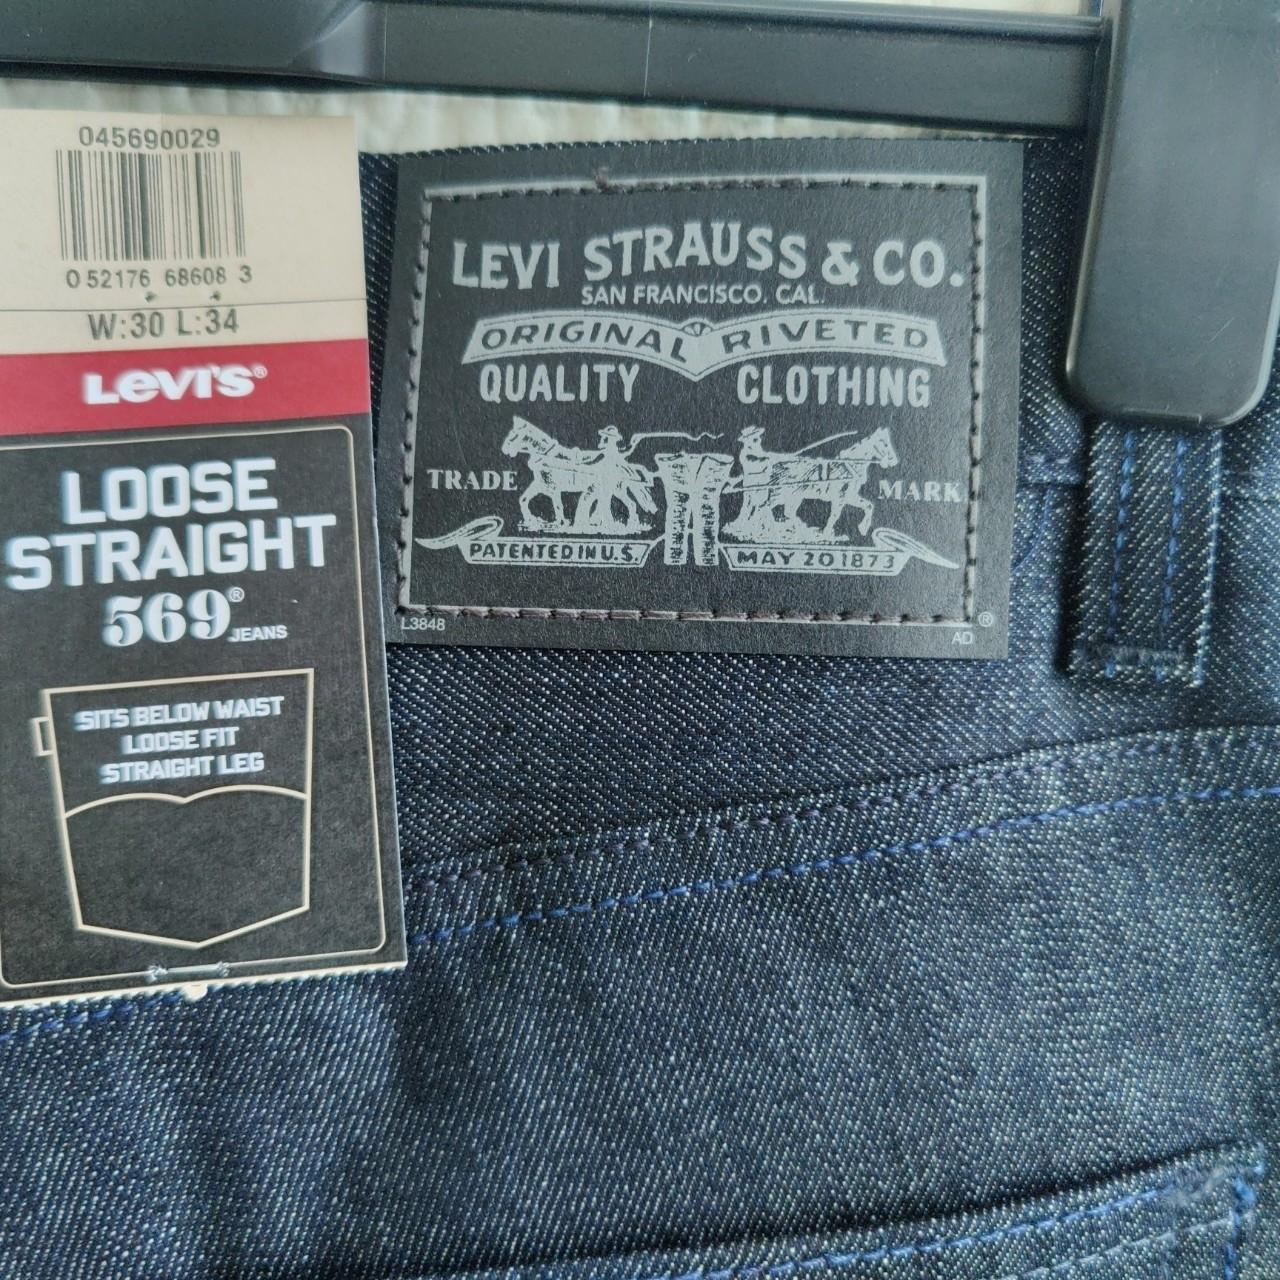 RARE Levi's 569 Loose Straight Dark Blue Jeans W30... - Depop